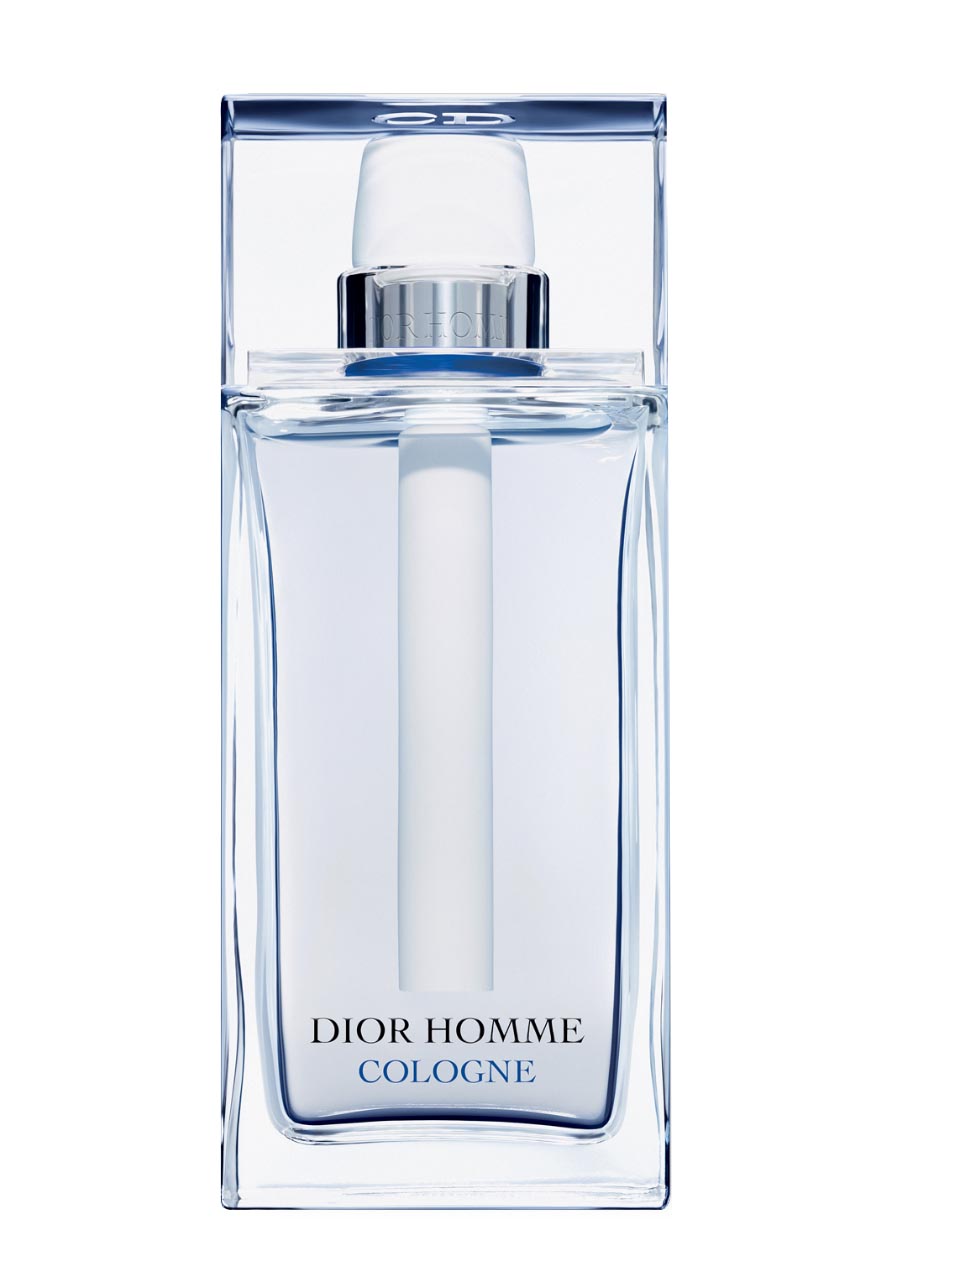 Dior Homme C F091903009 EDCS null - onesize - 1